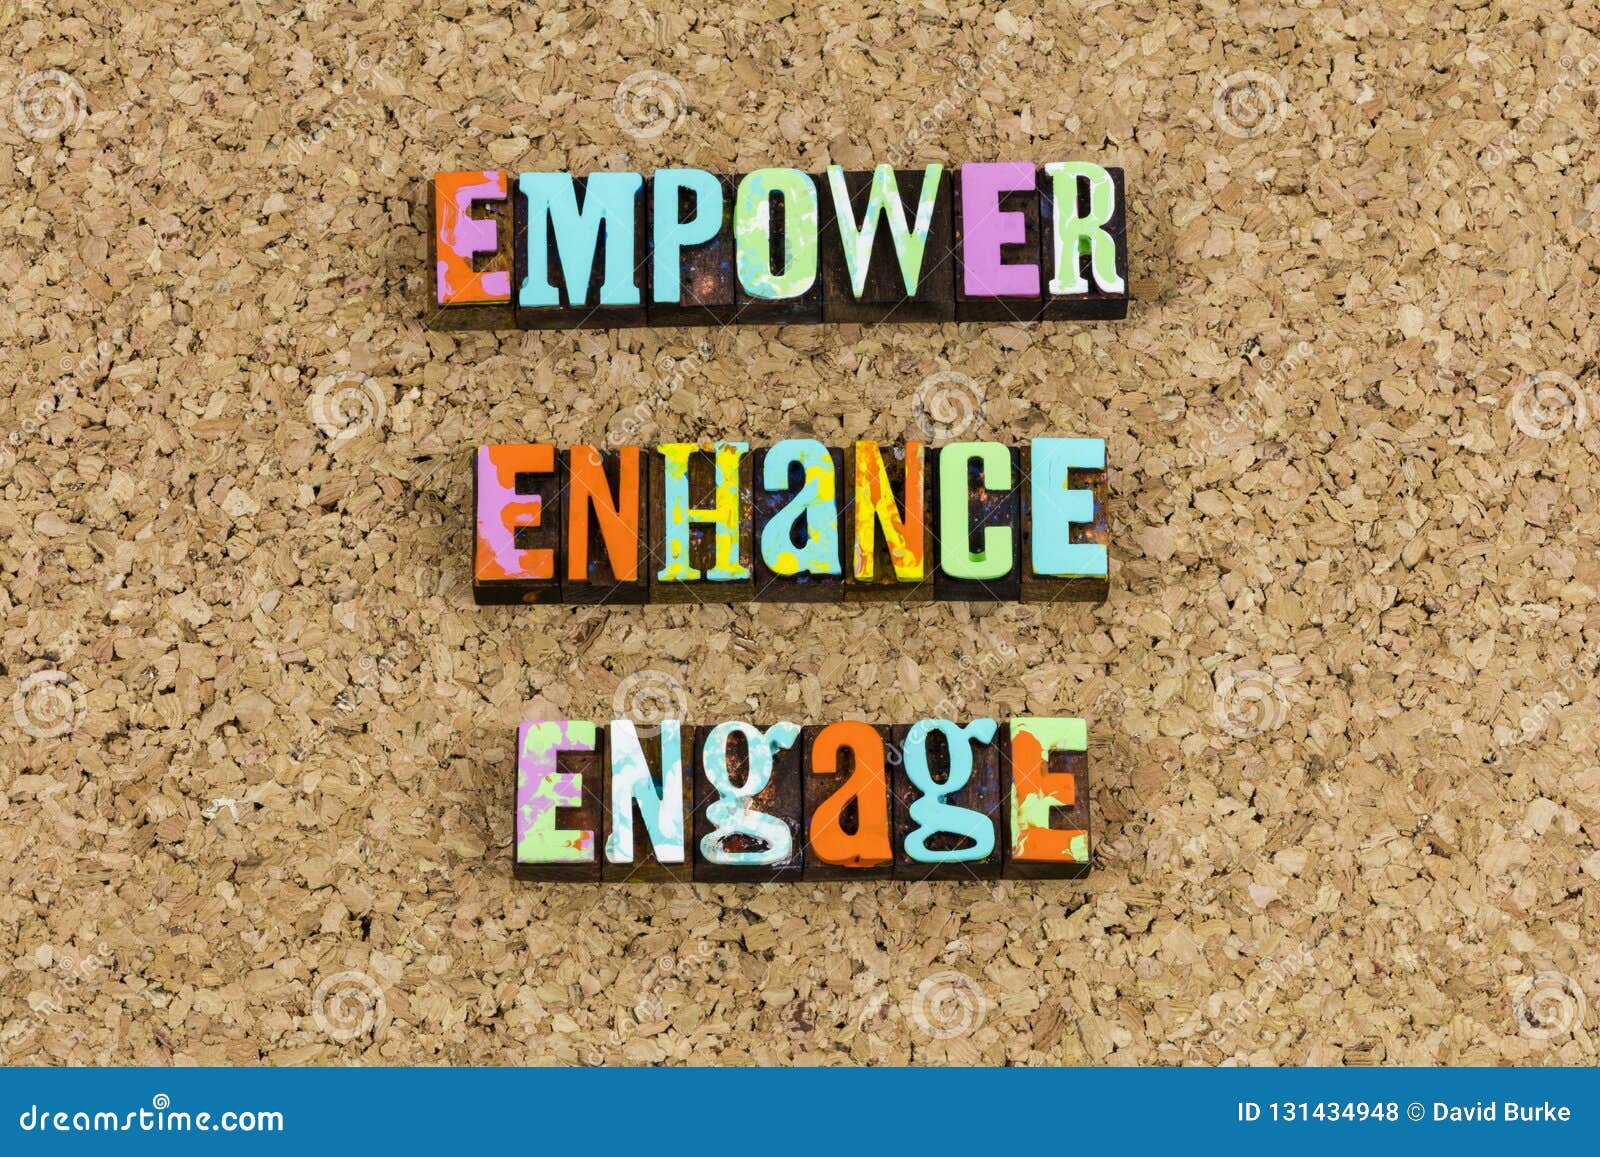 empower enhance engage leadership ability ambition determination